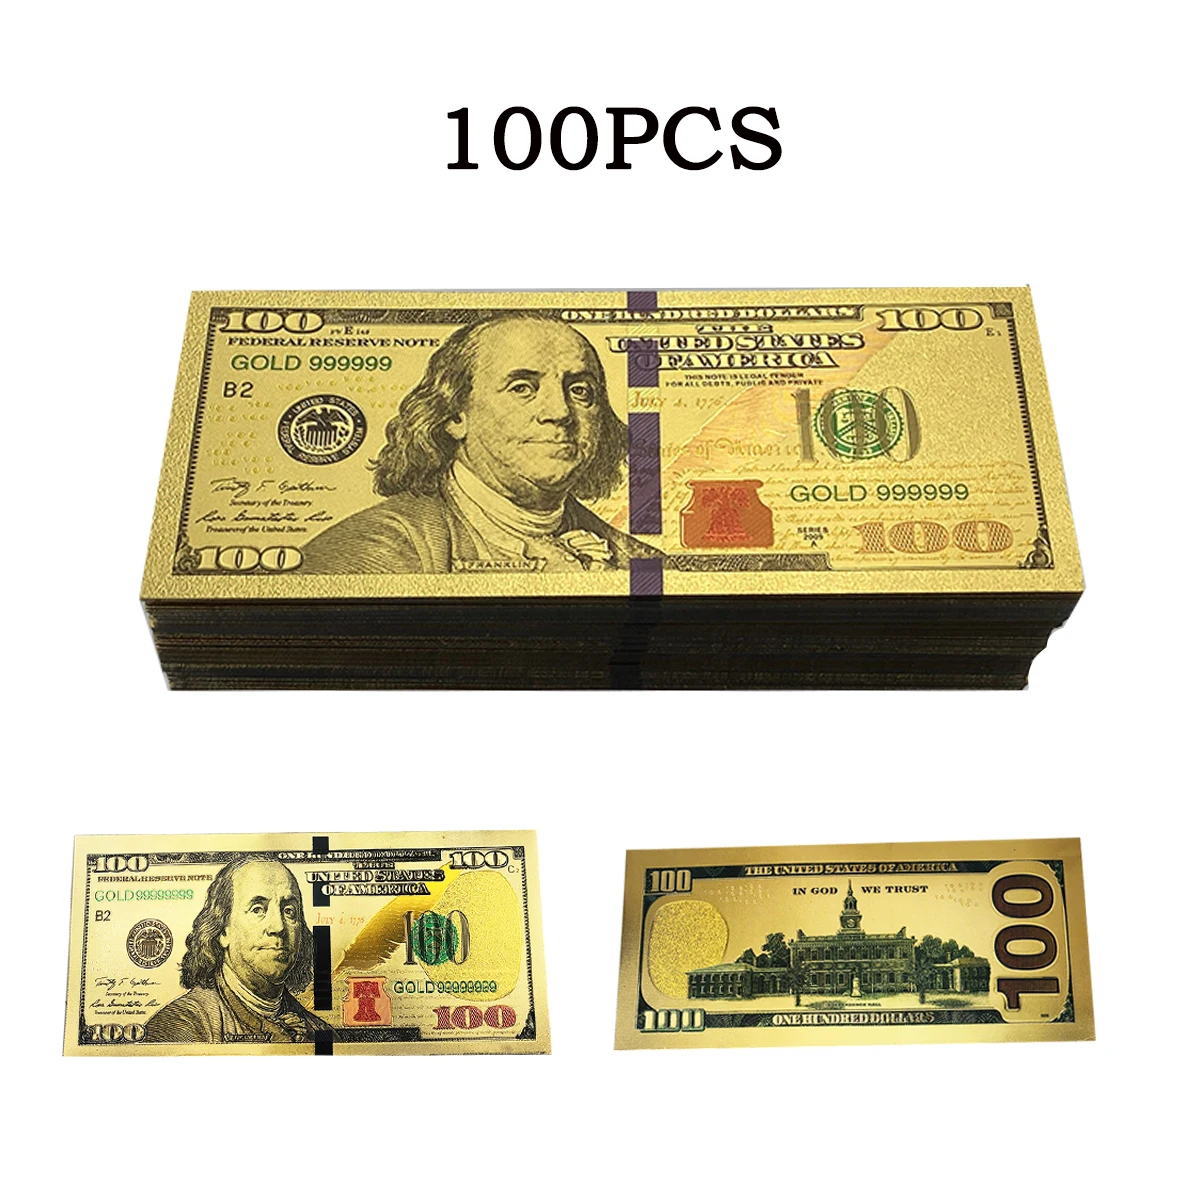 100pcs 14.6*6.5cmm USA New 100 Dollar bills Gold Foiled Platsic Replica Banknote Fake Money United States OF America Souvenirs